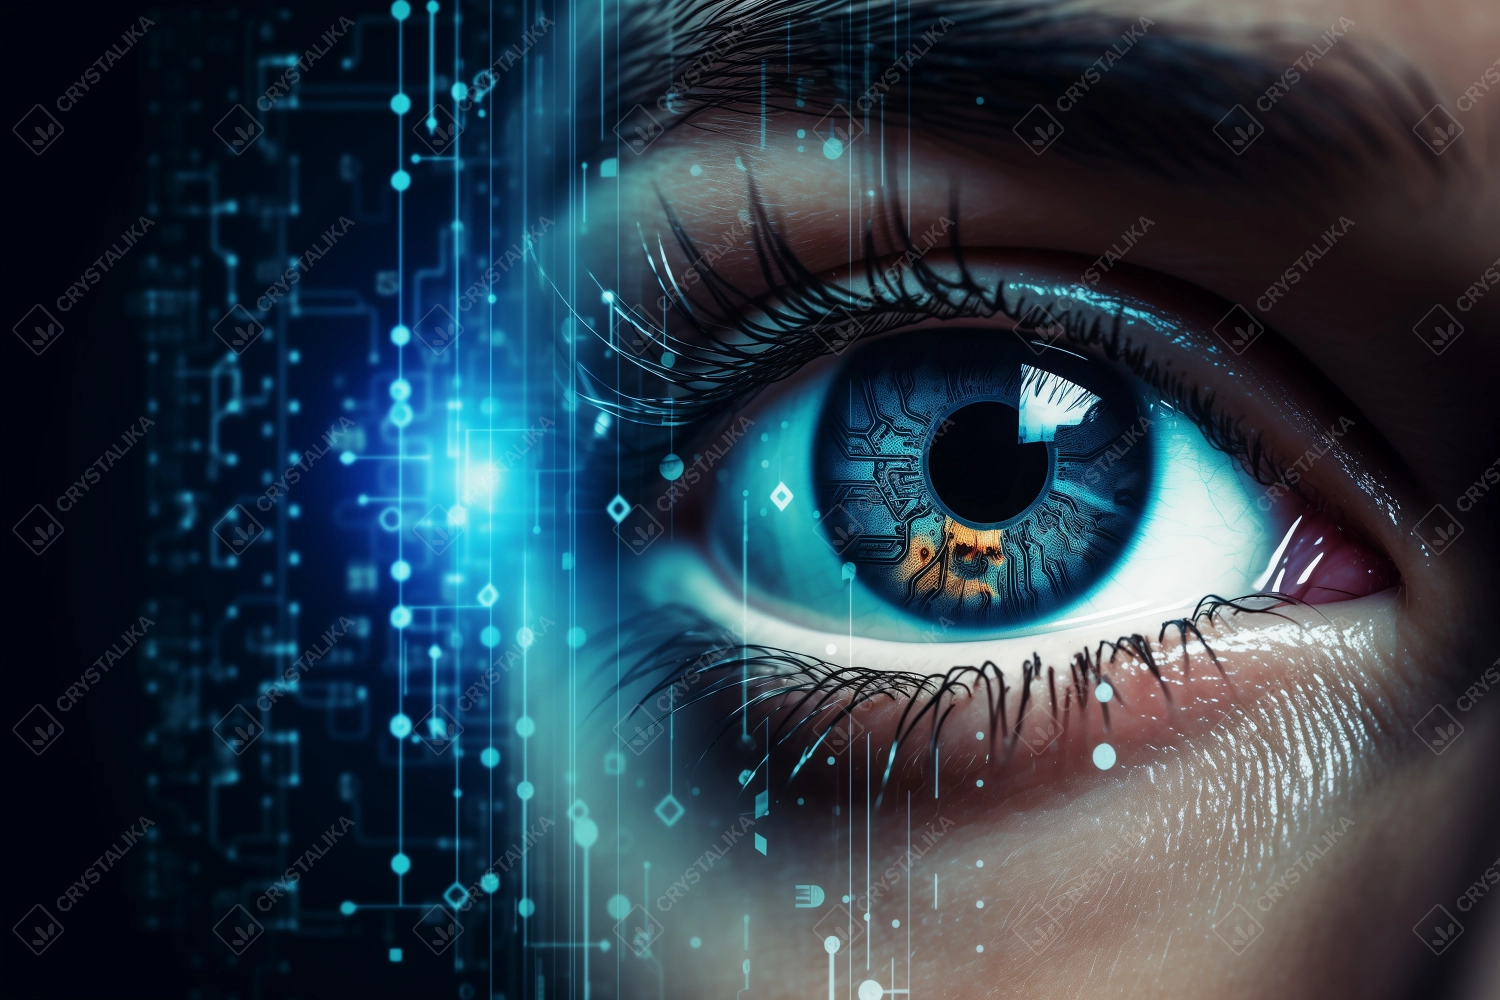 close-up eye, biometric security identify